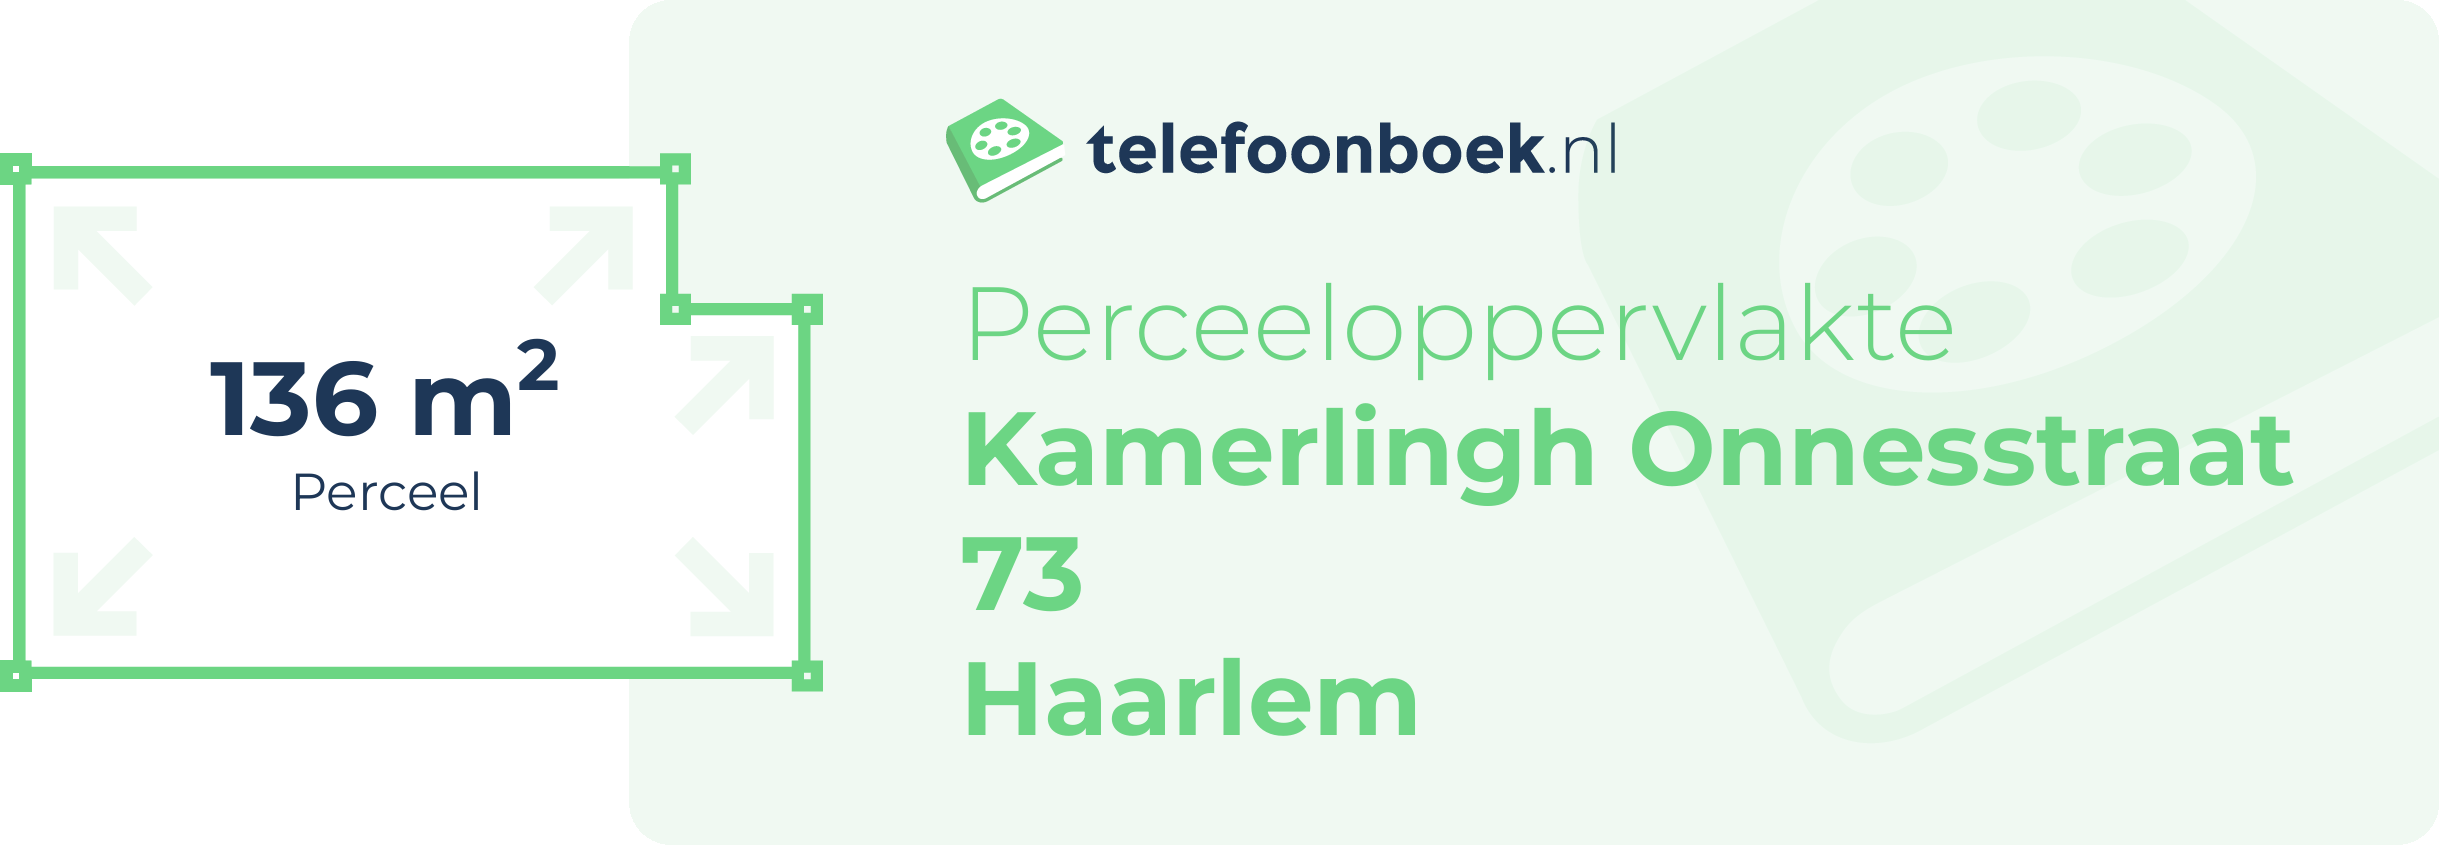 Perceeloppervlakte Kamerlingh Onnesstraat 73 Haarlem